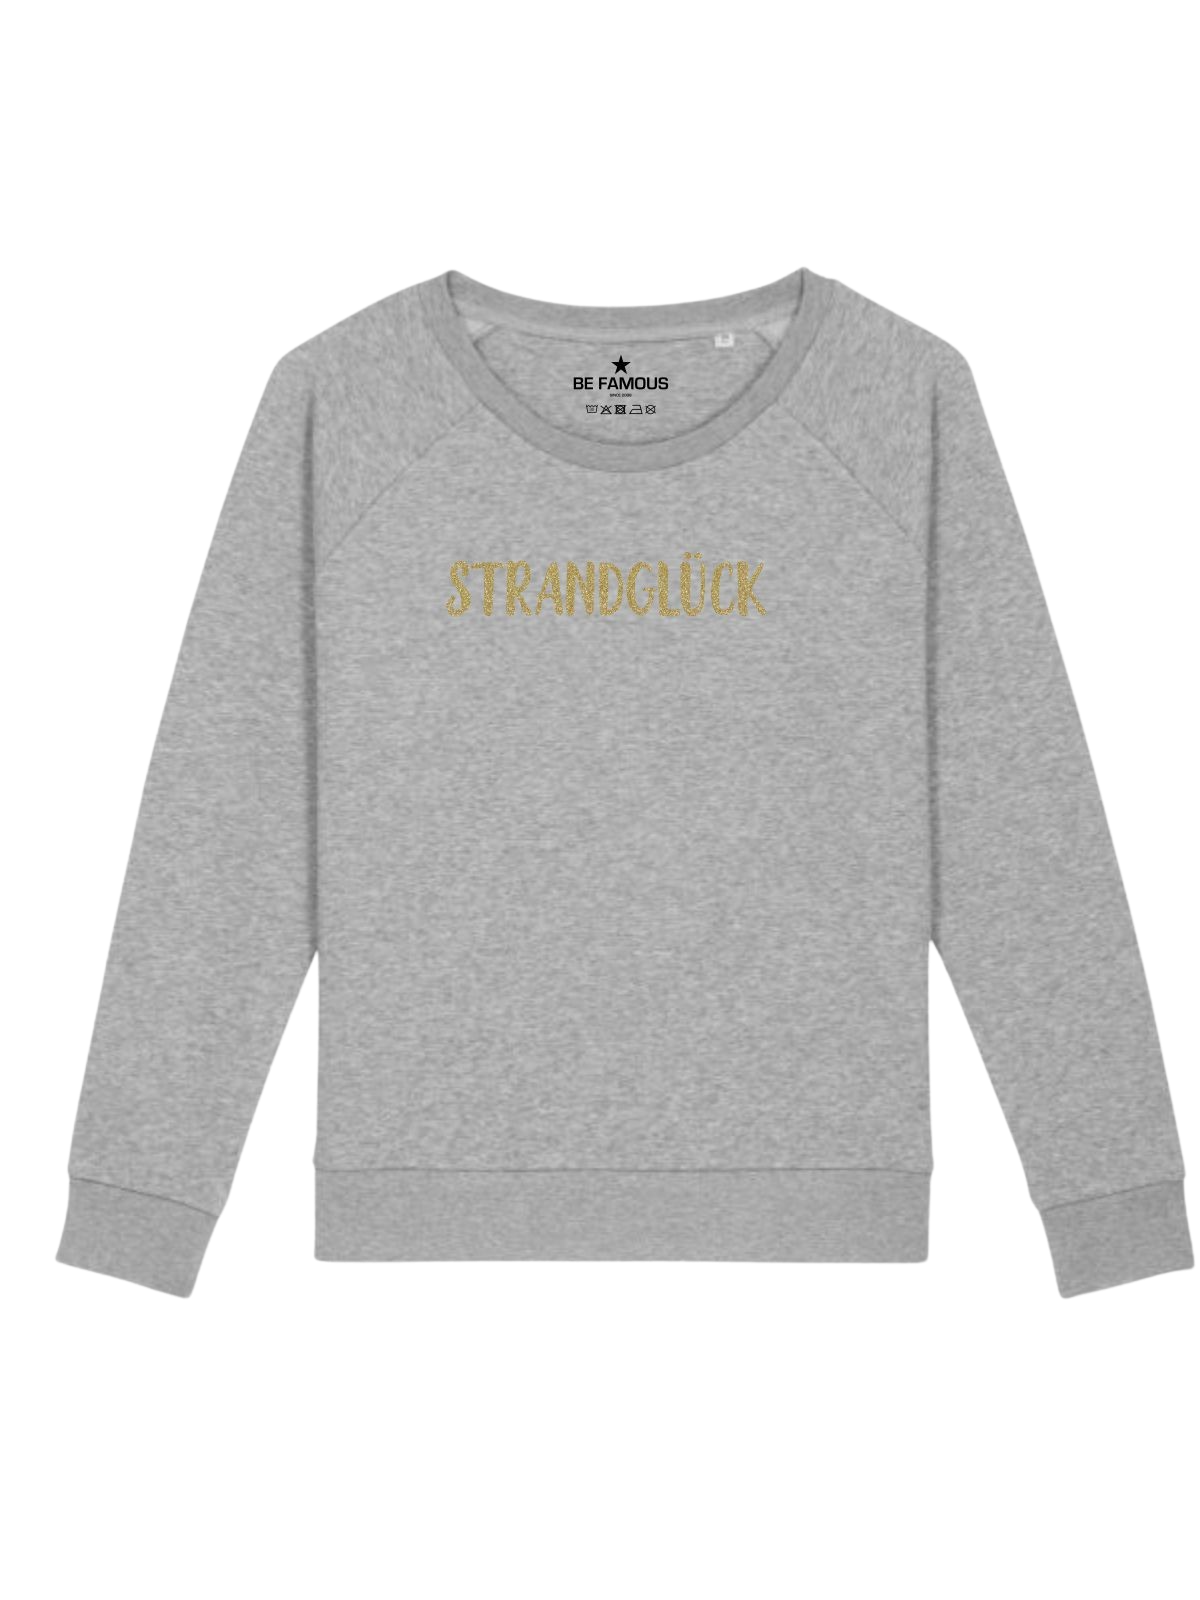 Be Famous Women Relaxed Fit Sweatshirt Strandglück Sweatshirt Grey (Print: 14K Gold Glitter G0094) XXL